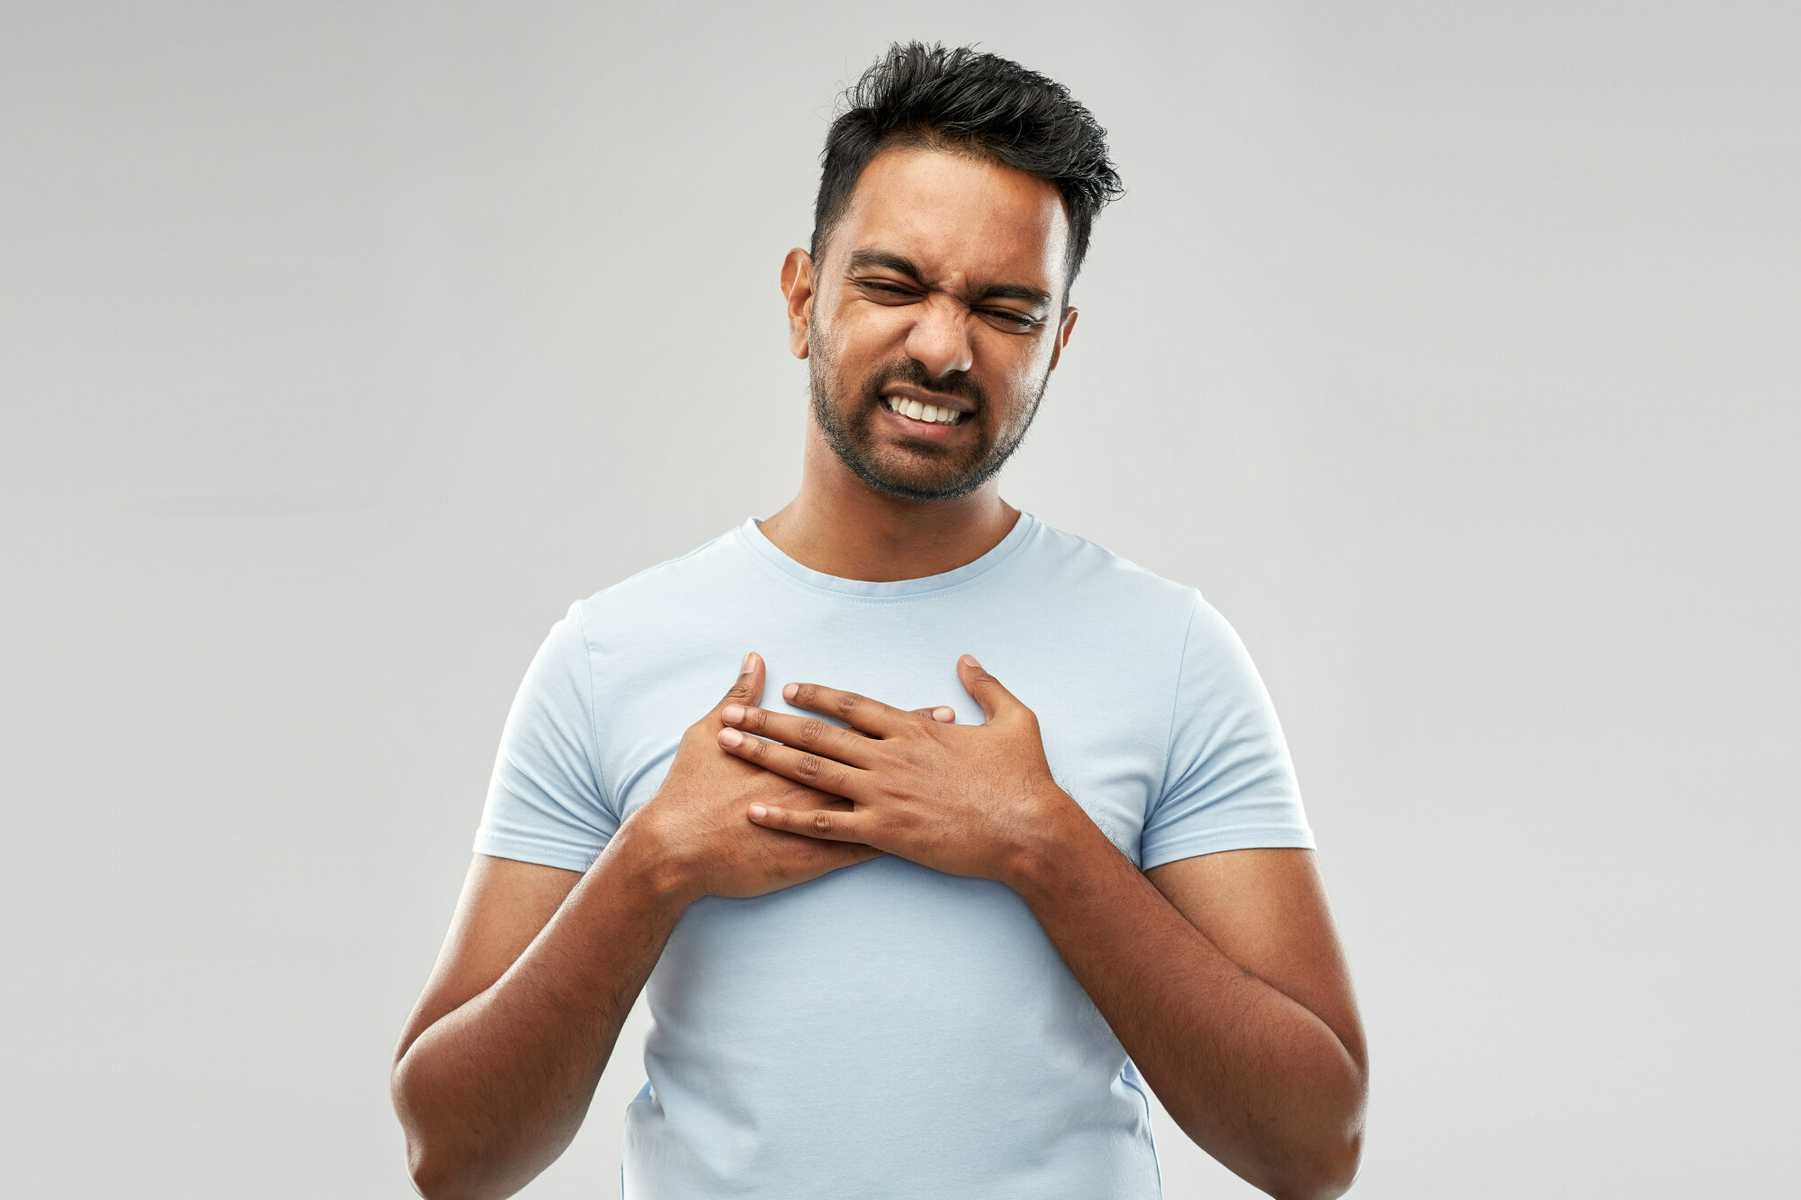 Lifestyle Factors and Heartburn